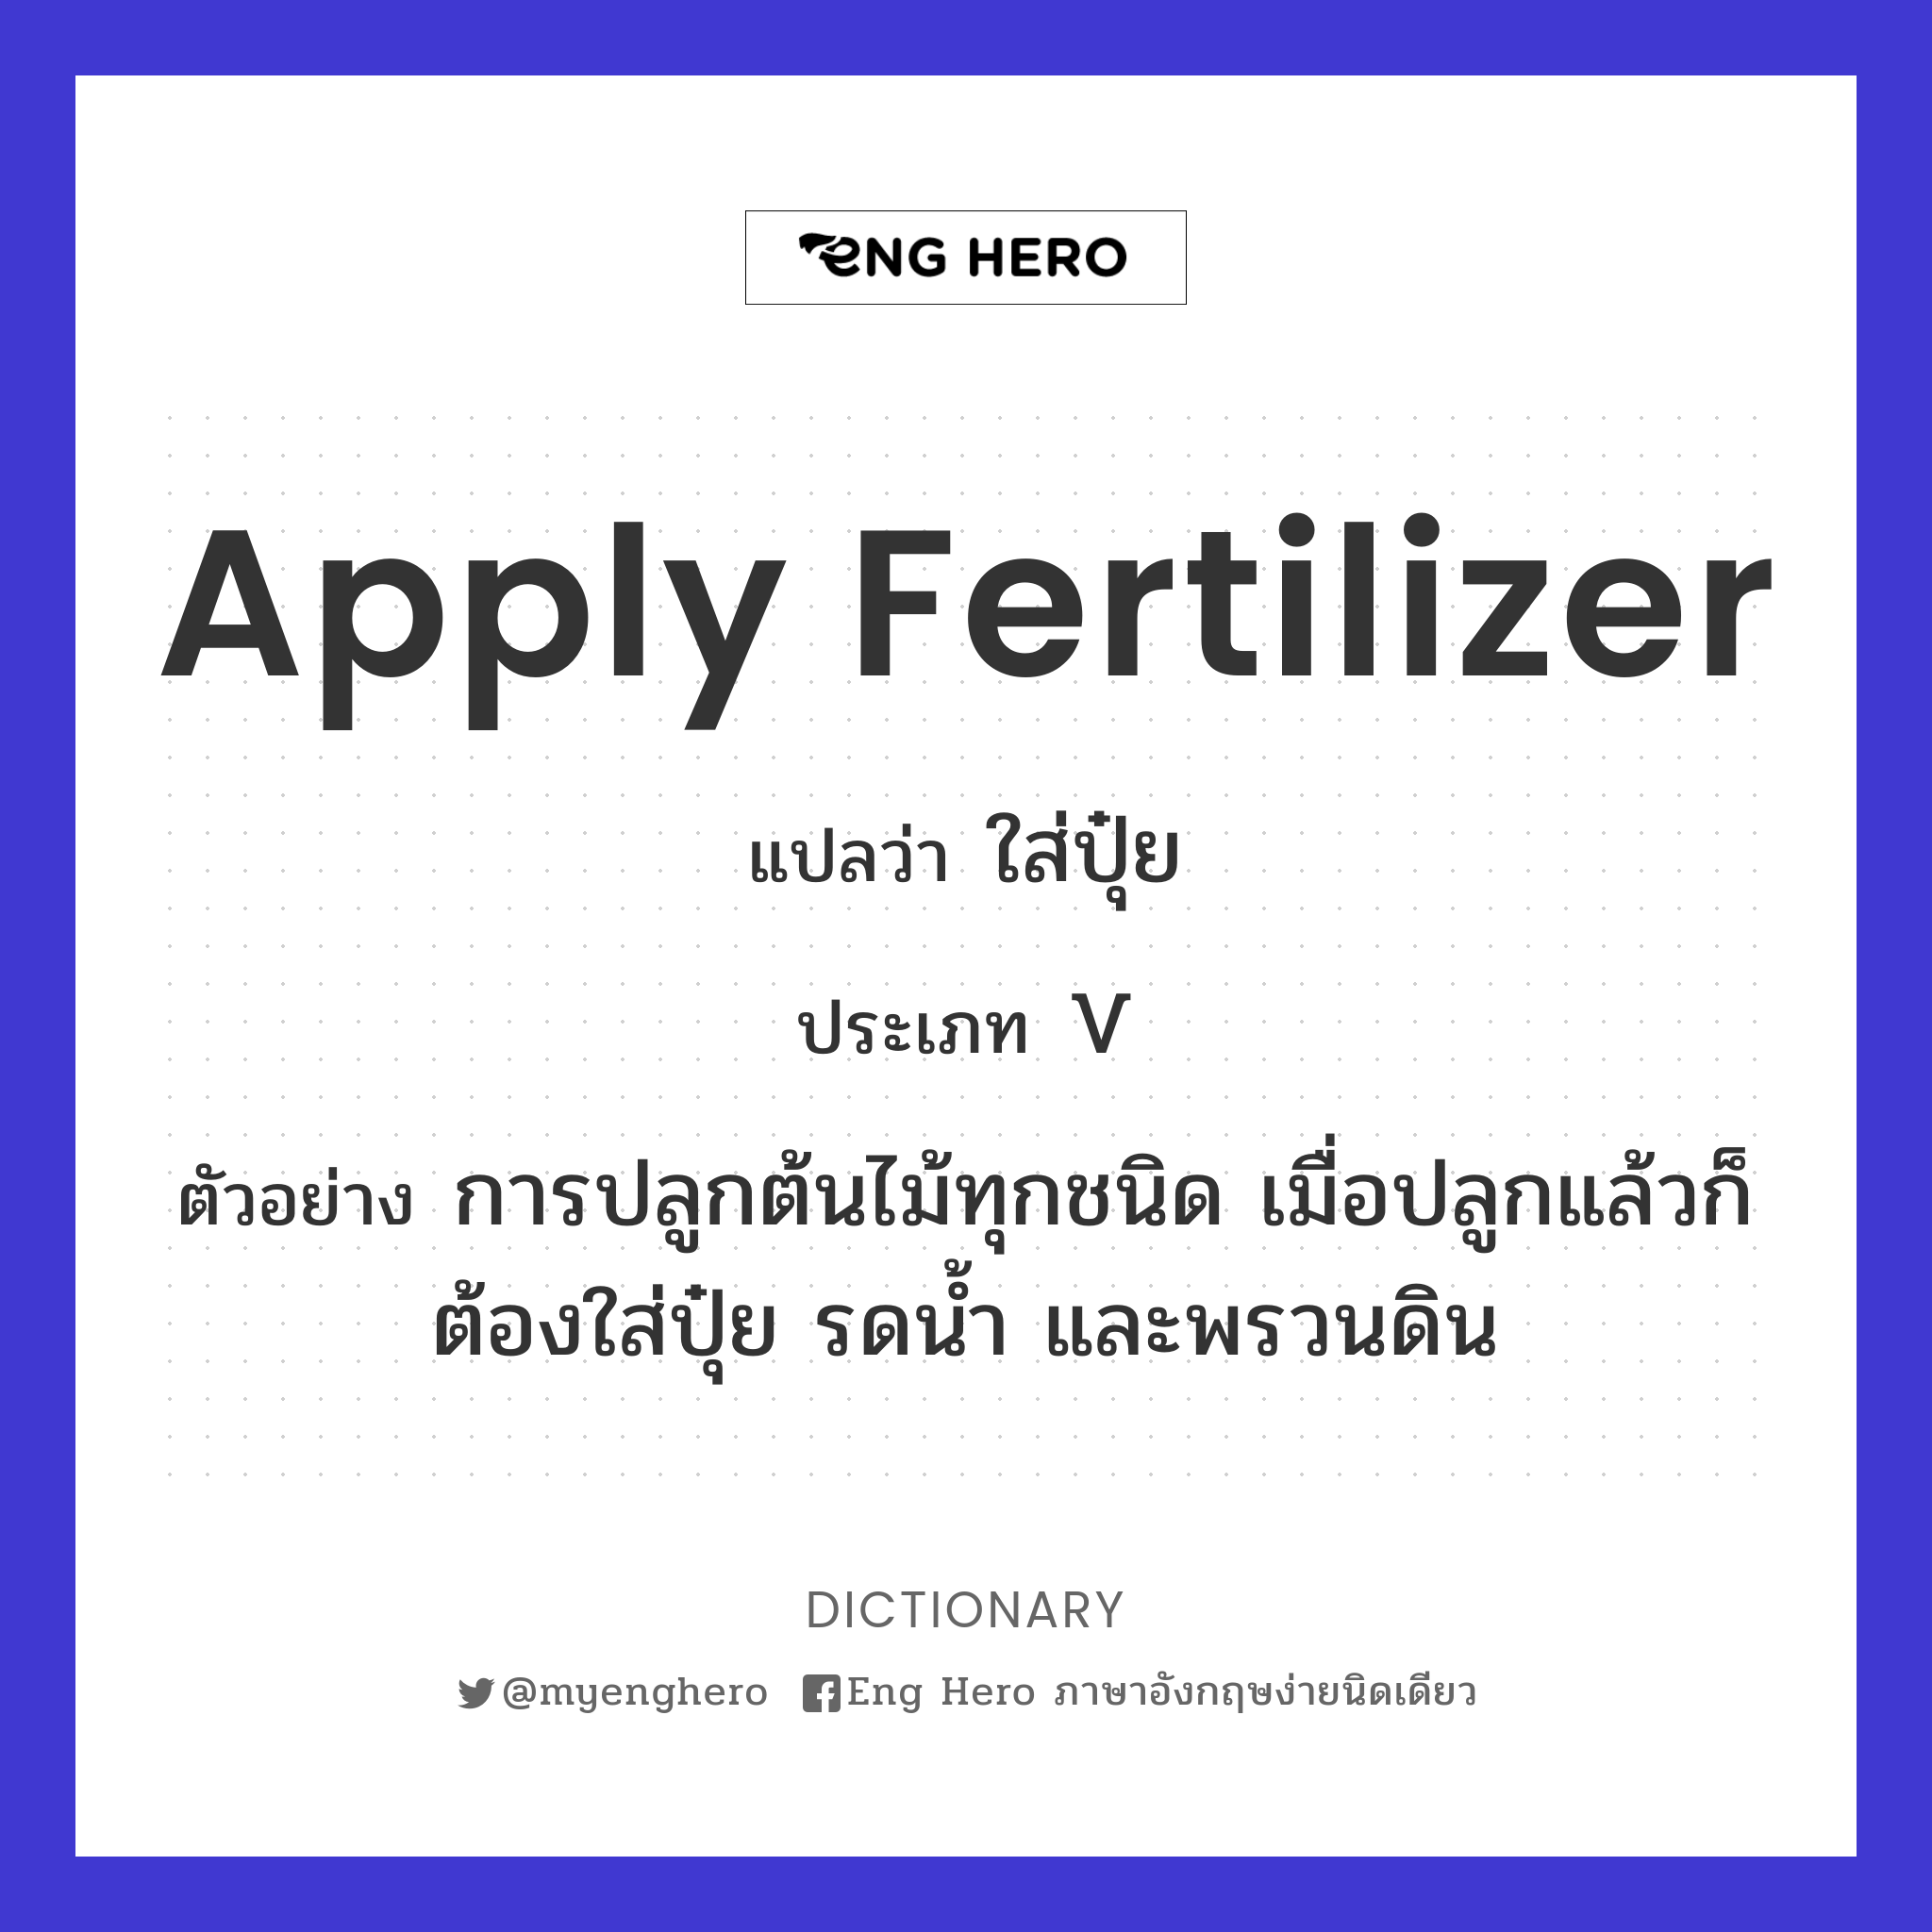 apply fertilizer